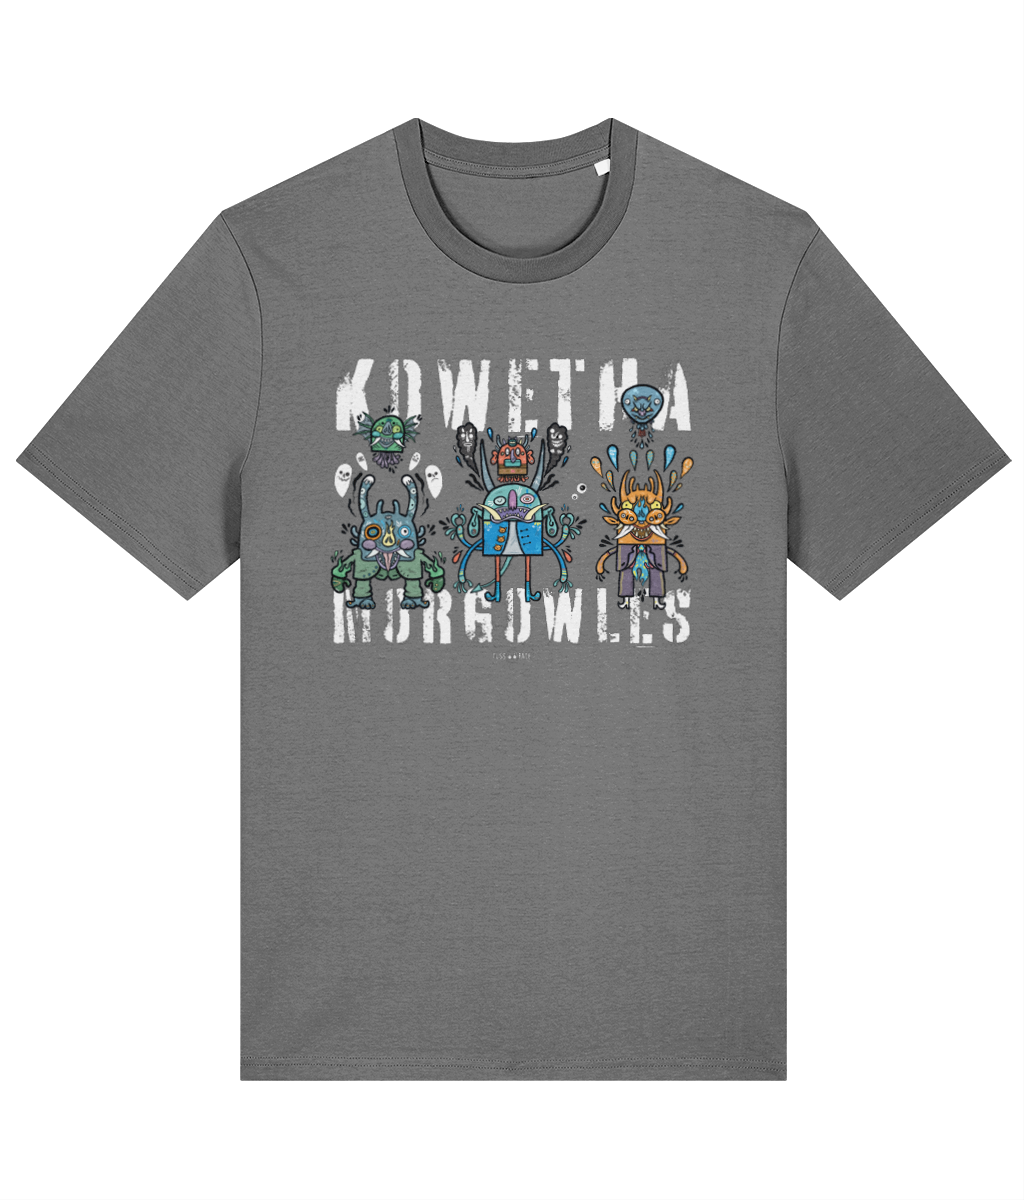 Kowetha Morgowles - Kernewek T-shirt